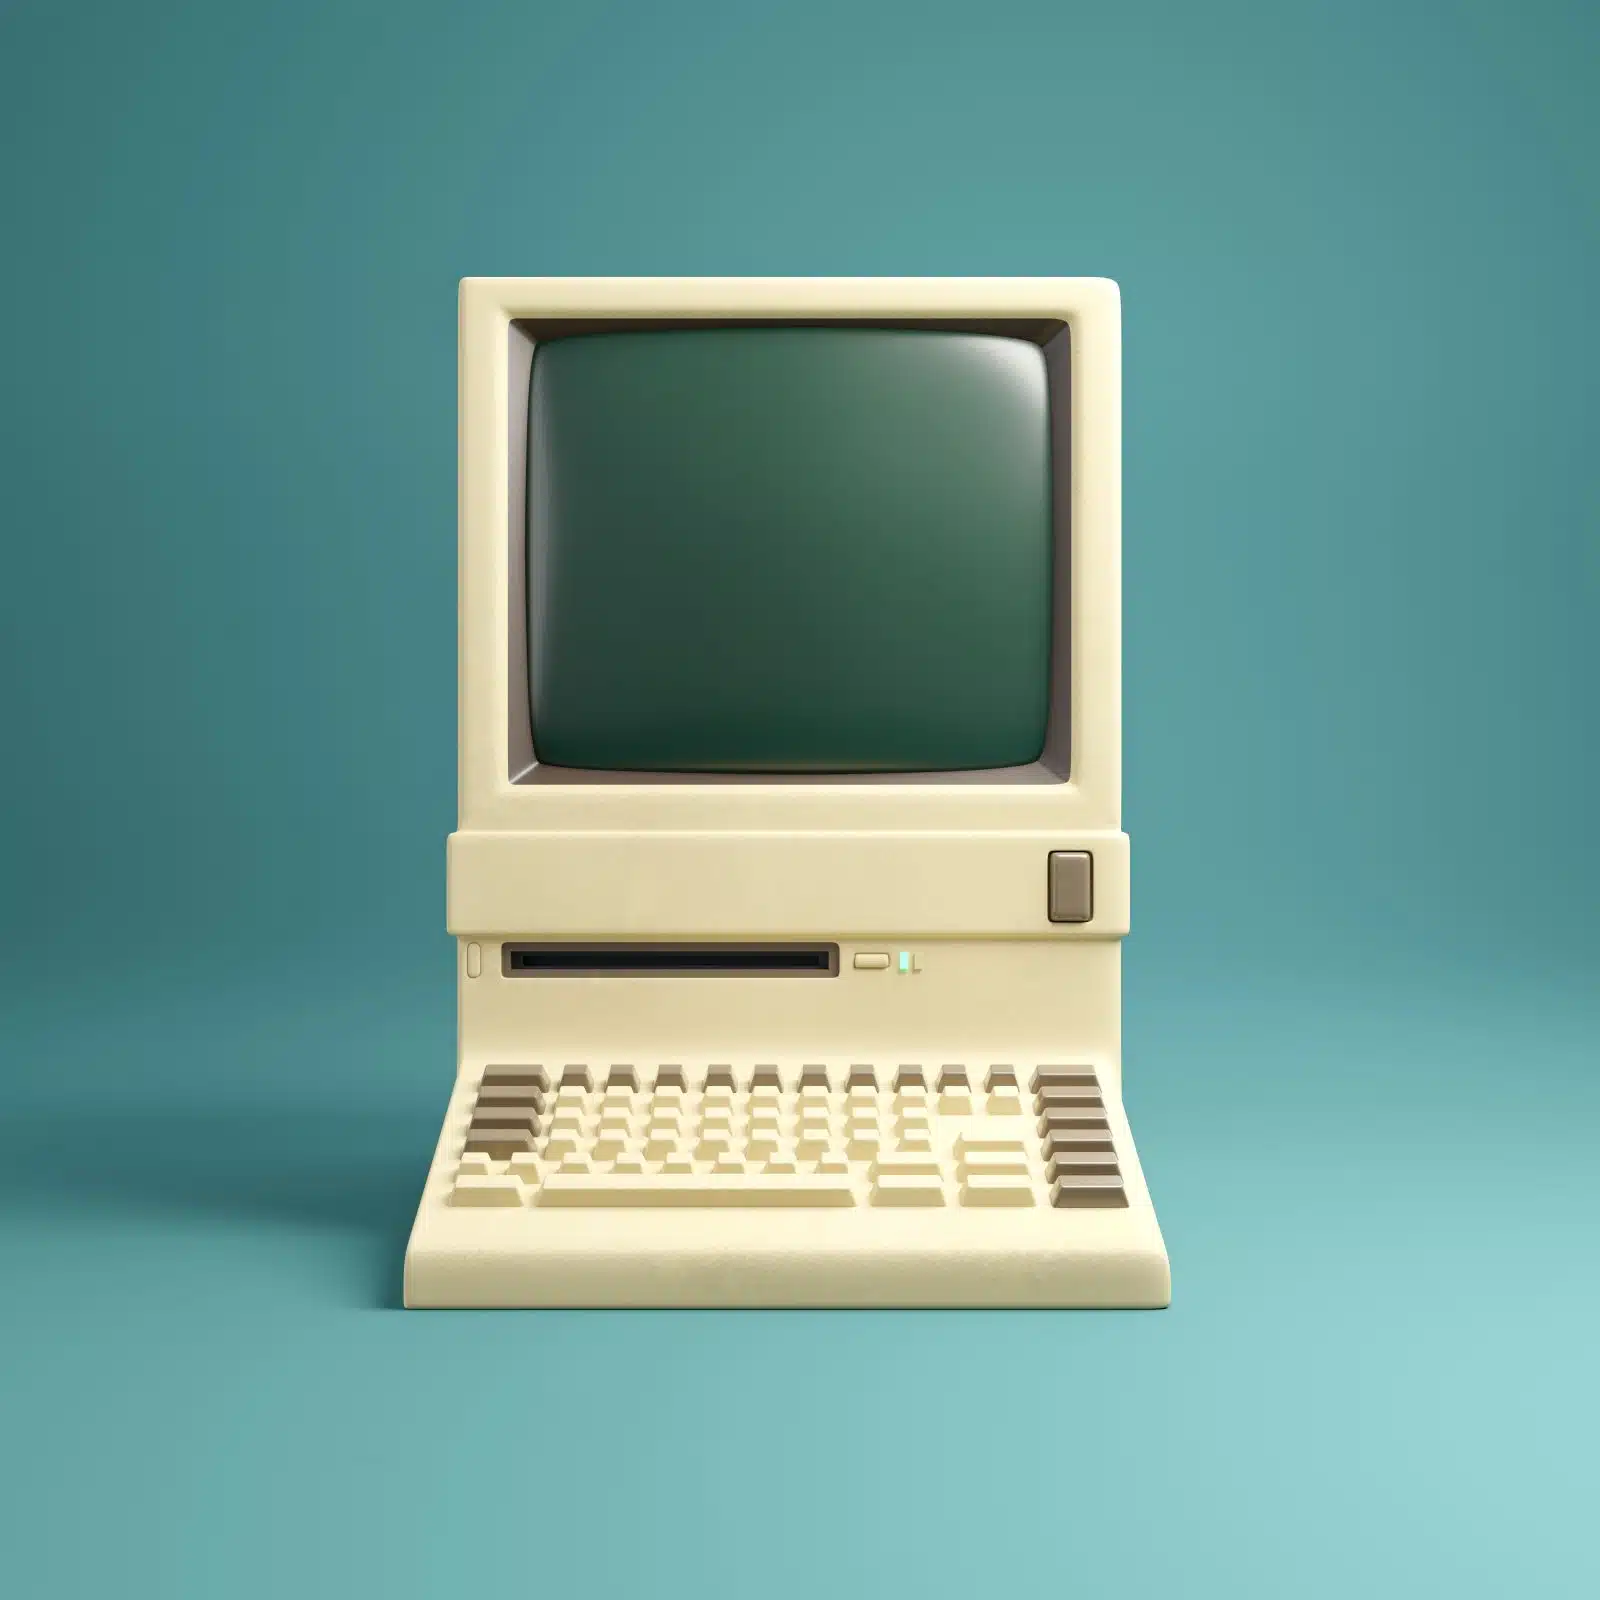 1980s PC Depositphotos 447290950 XL